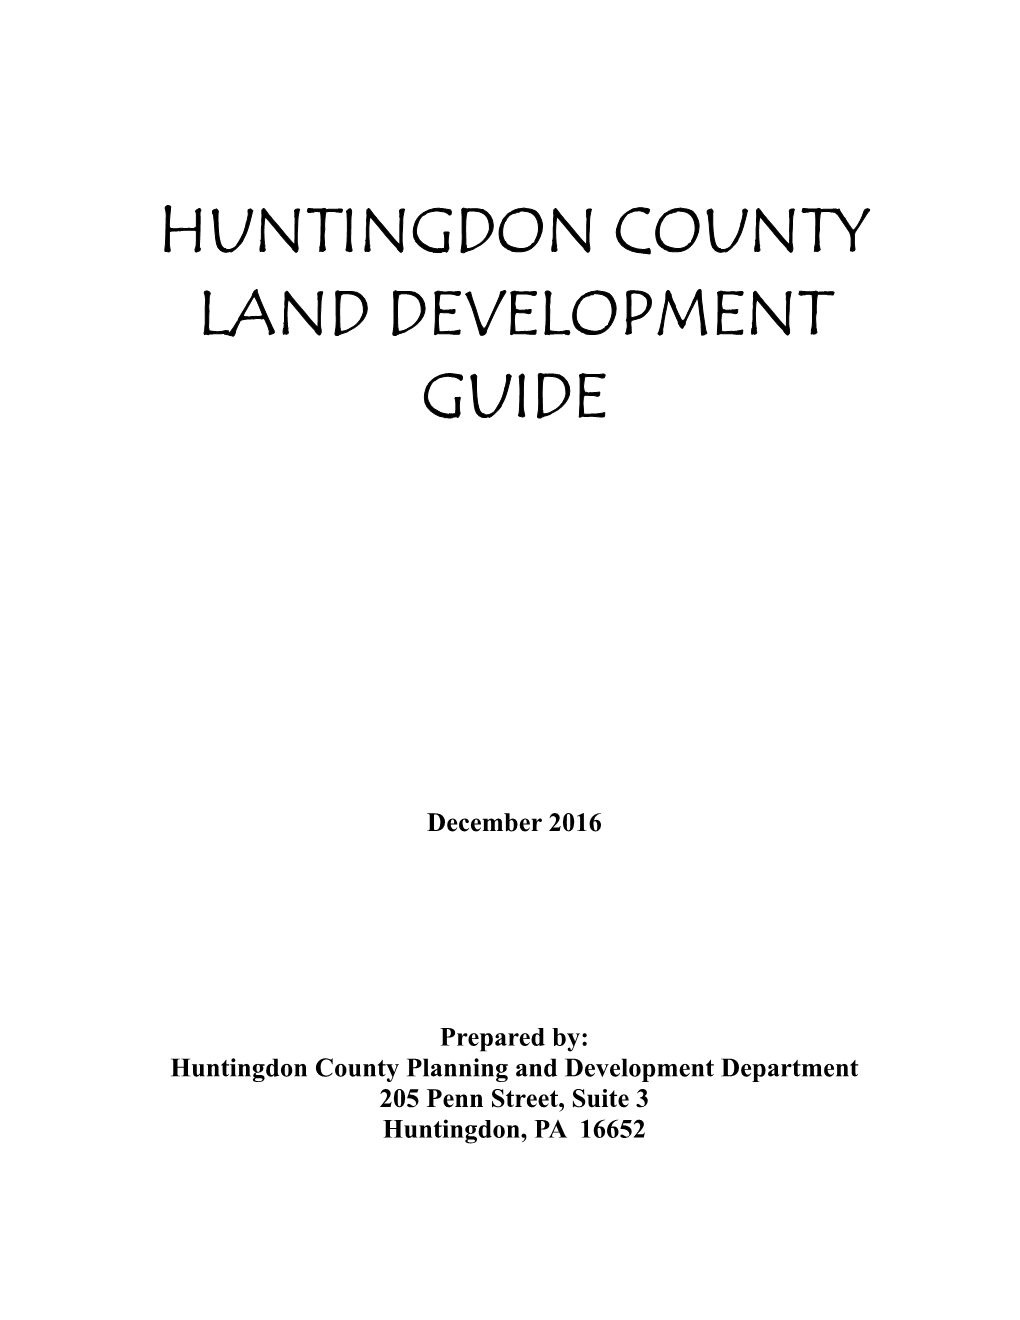 Land Development Guide